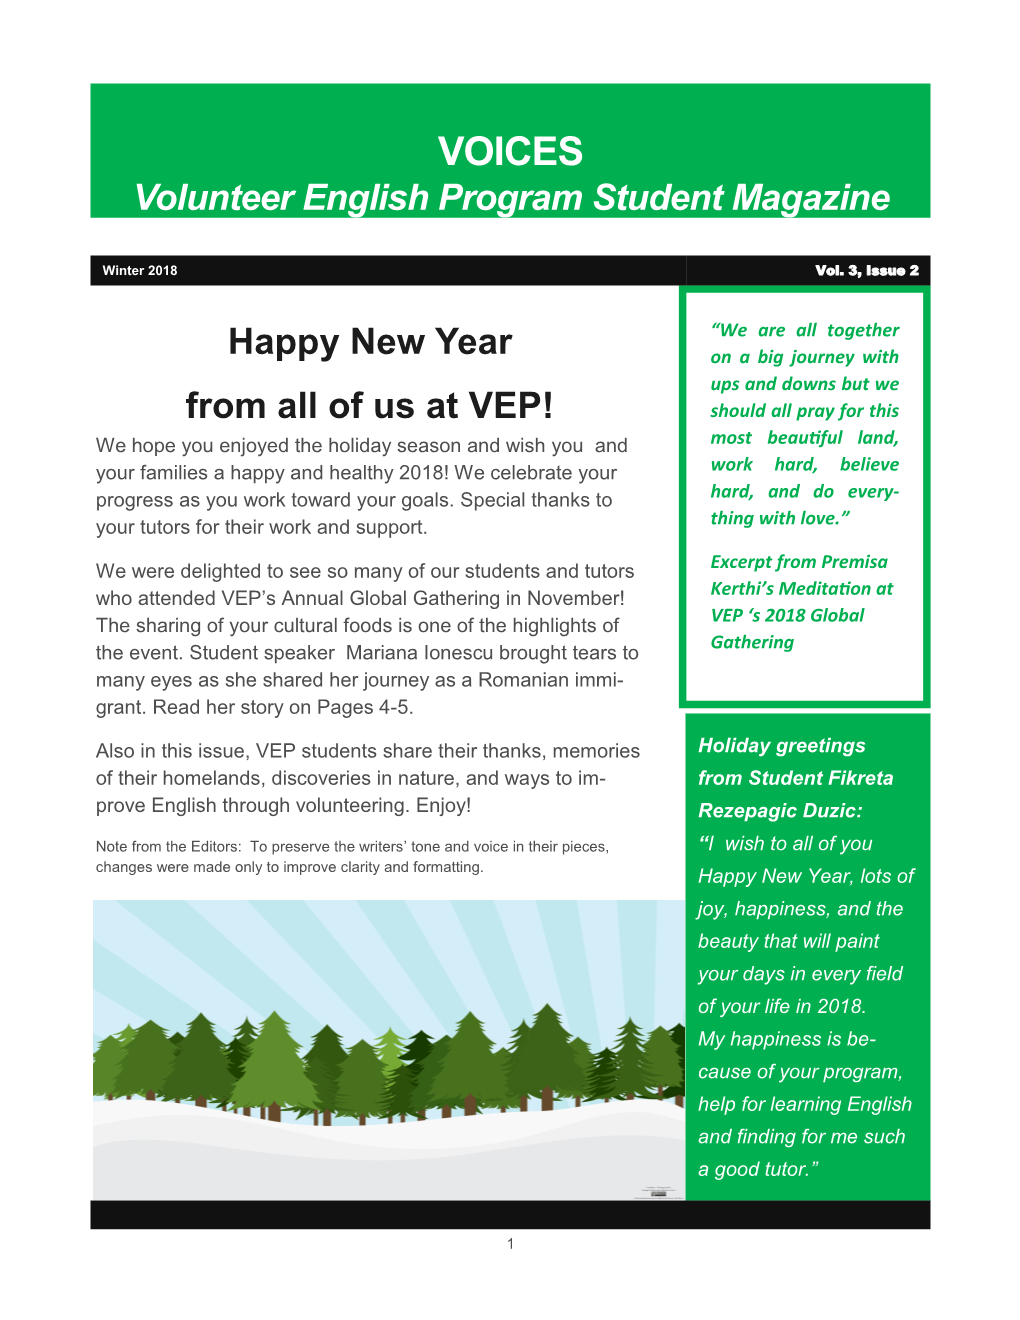 VOICES Volunteer English Program Student Magazine